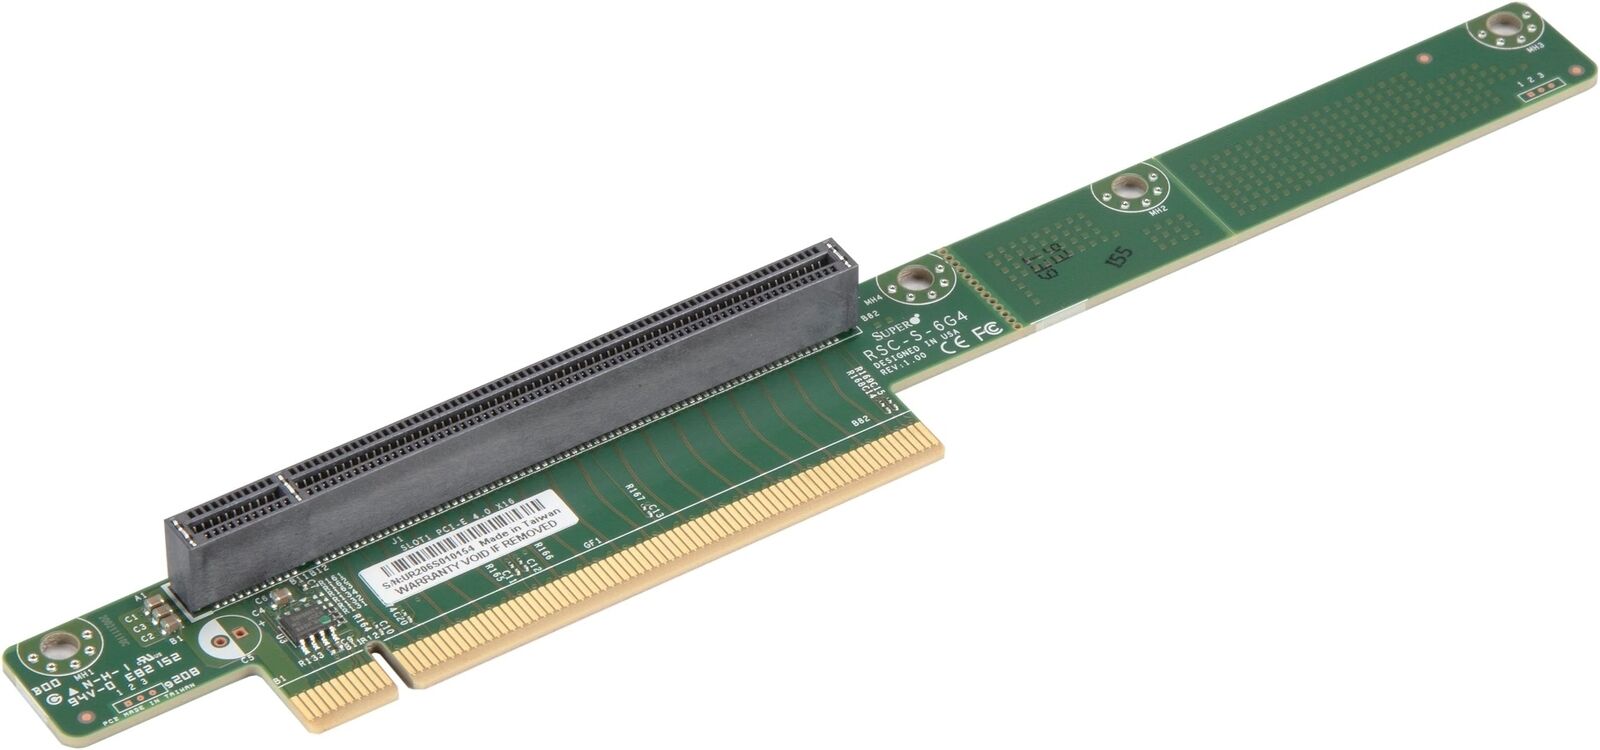 Supermicro RSC-S-6G4 Accessory 1U LHS Standard riser card w PCI-E 4.0 x16 slot